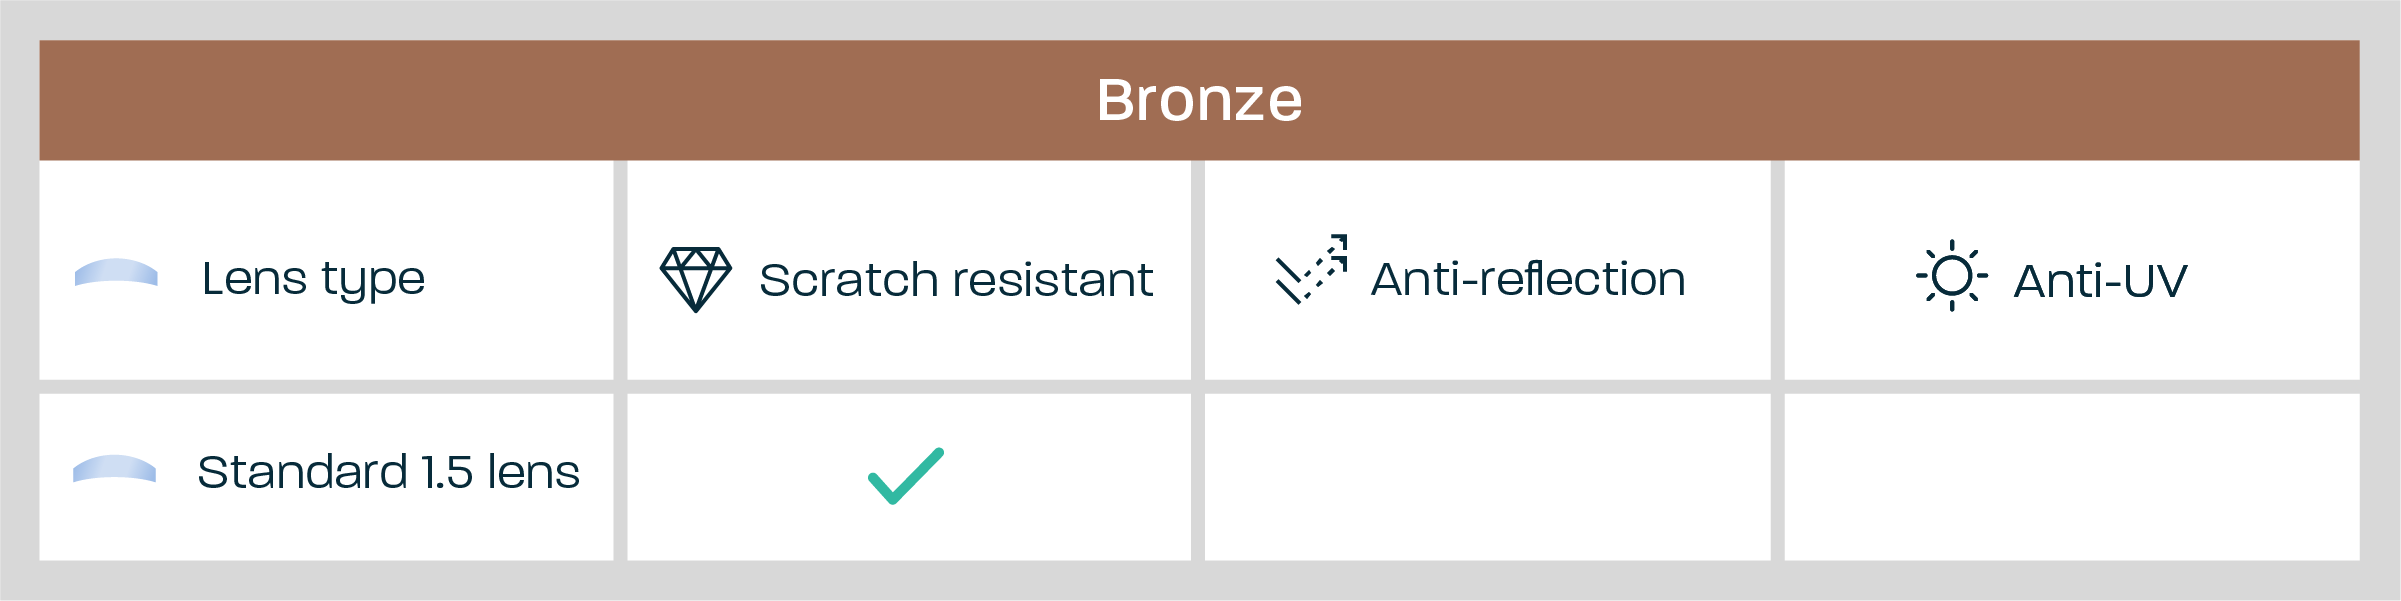 Bronze Package features: standard lenses, scratch-resistant